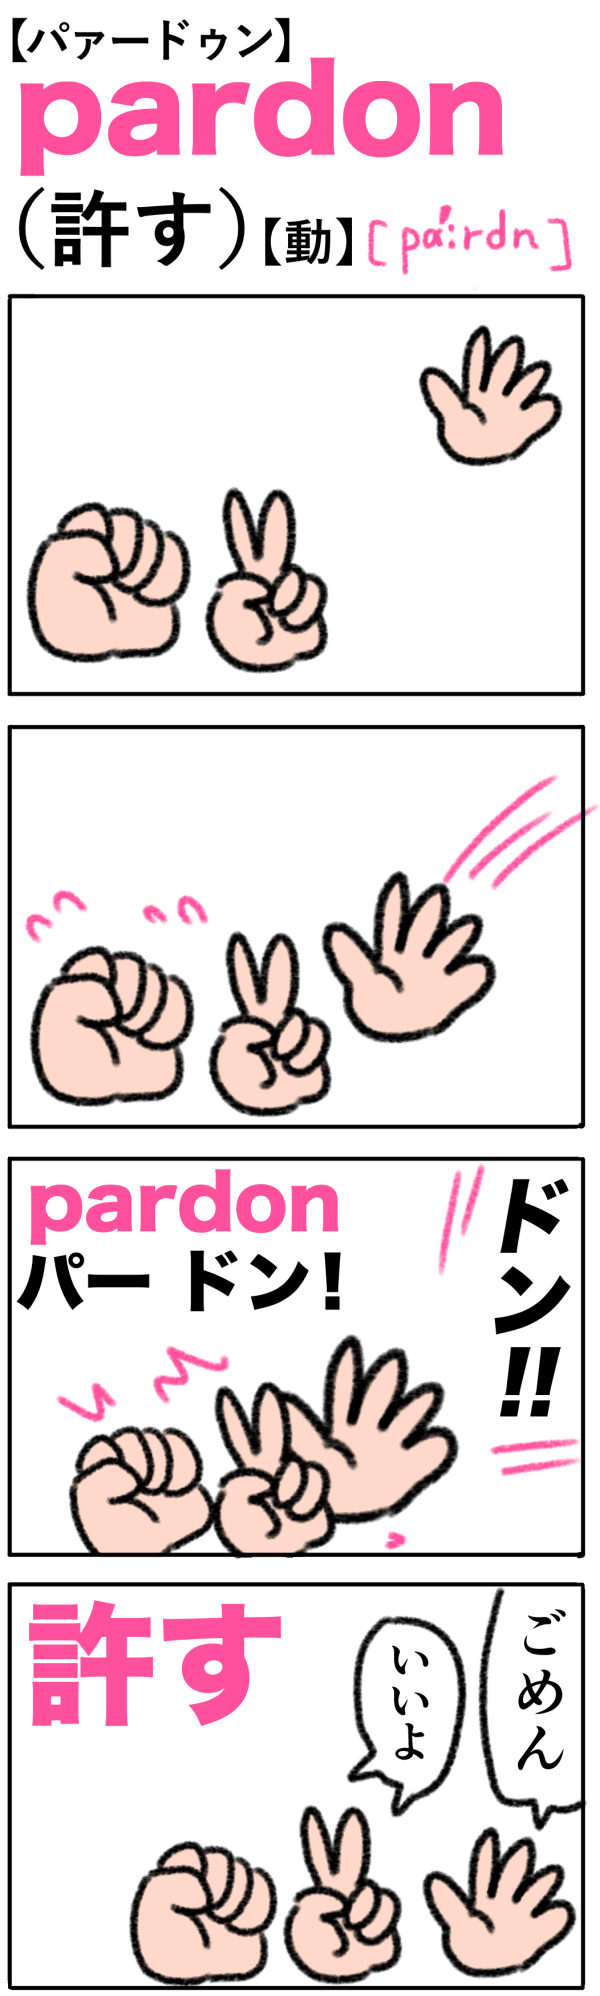 pardon（許す）の語呂合わせ英単語